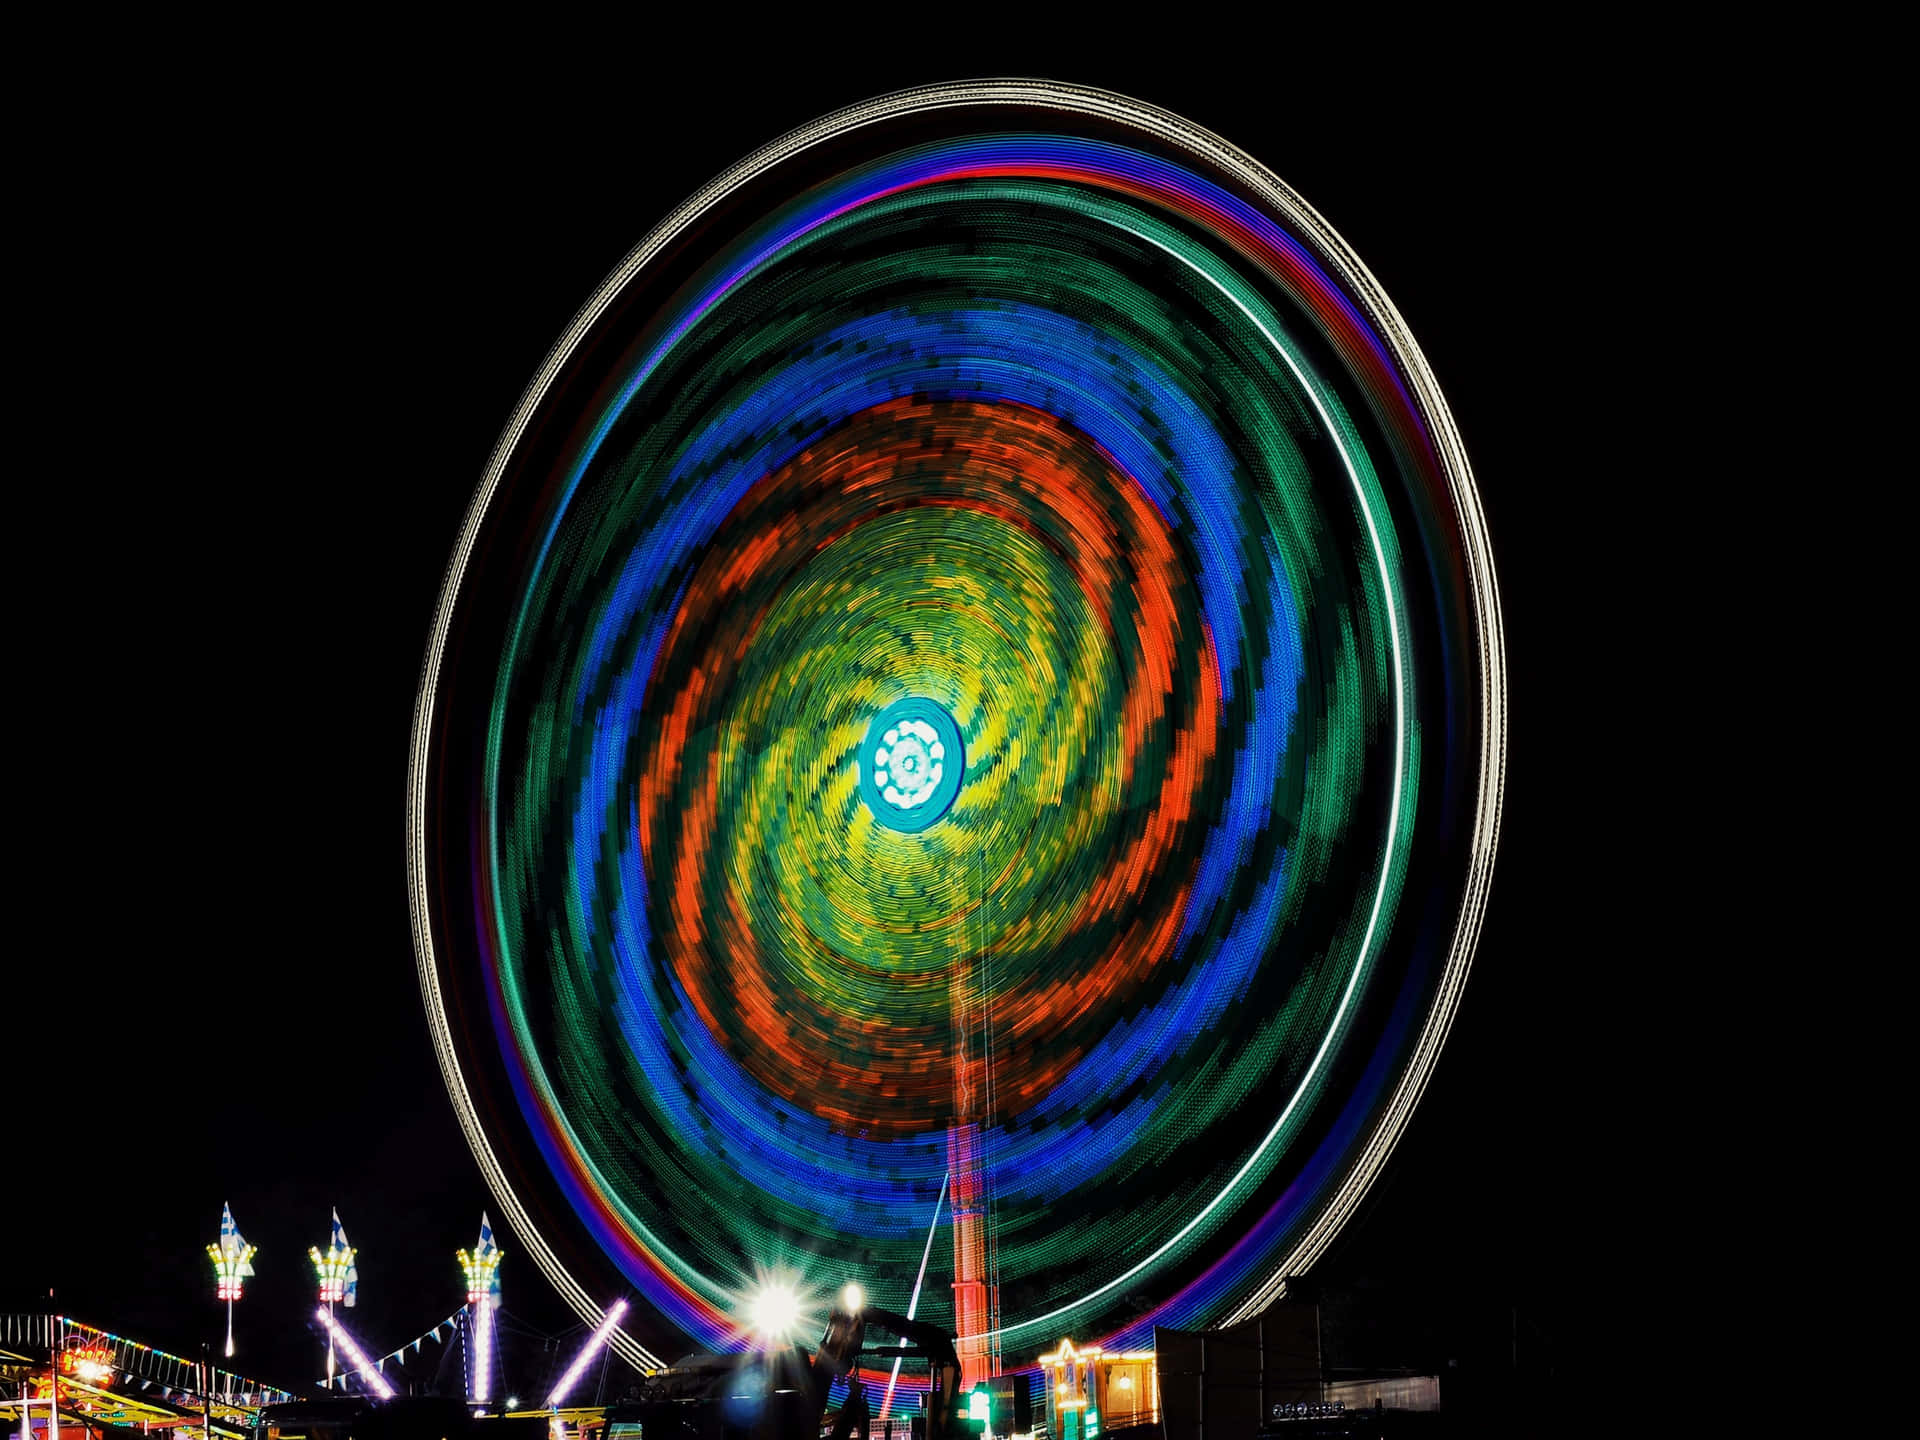 a colorful ferris wheel